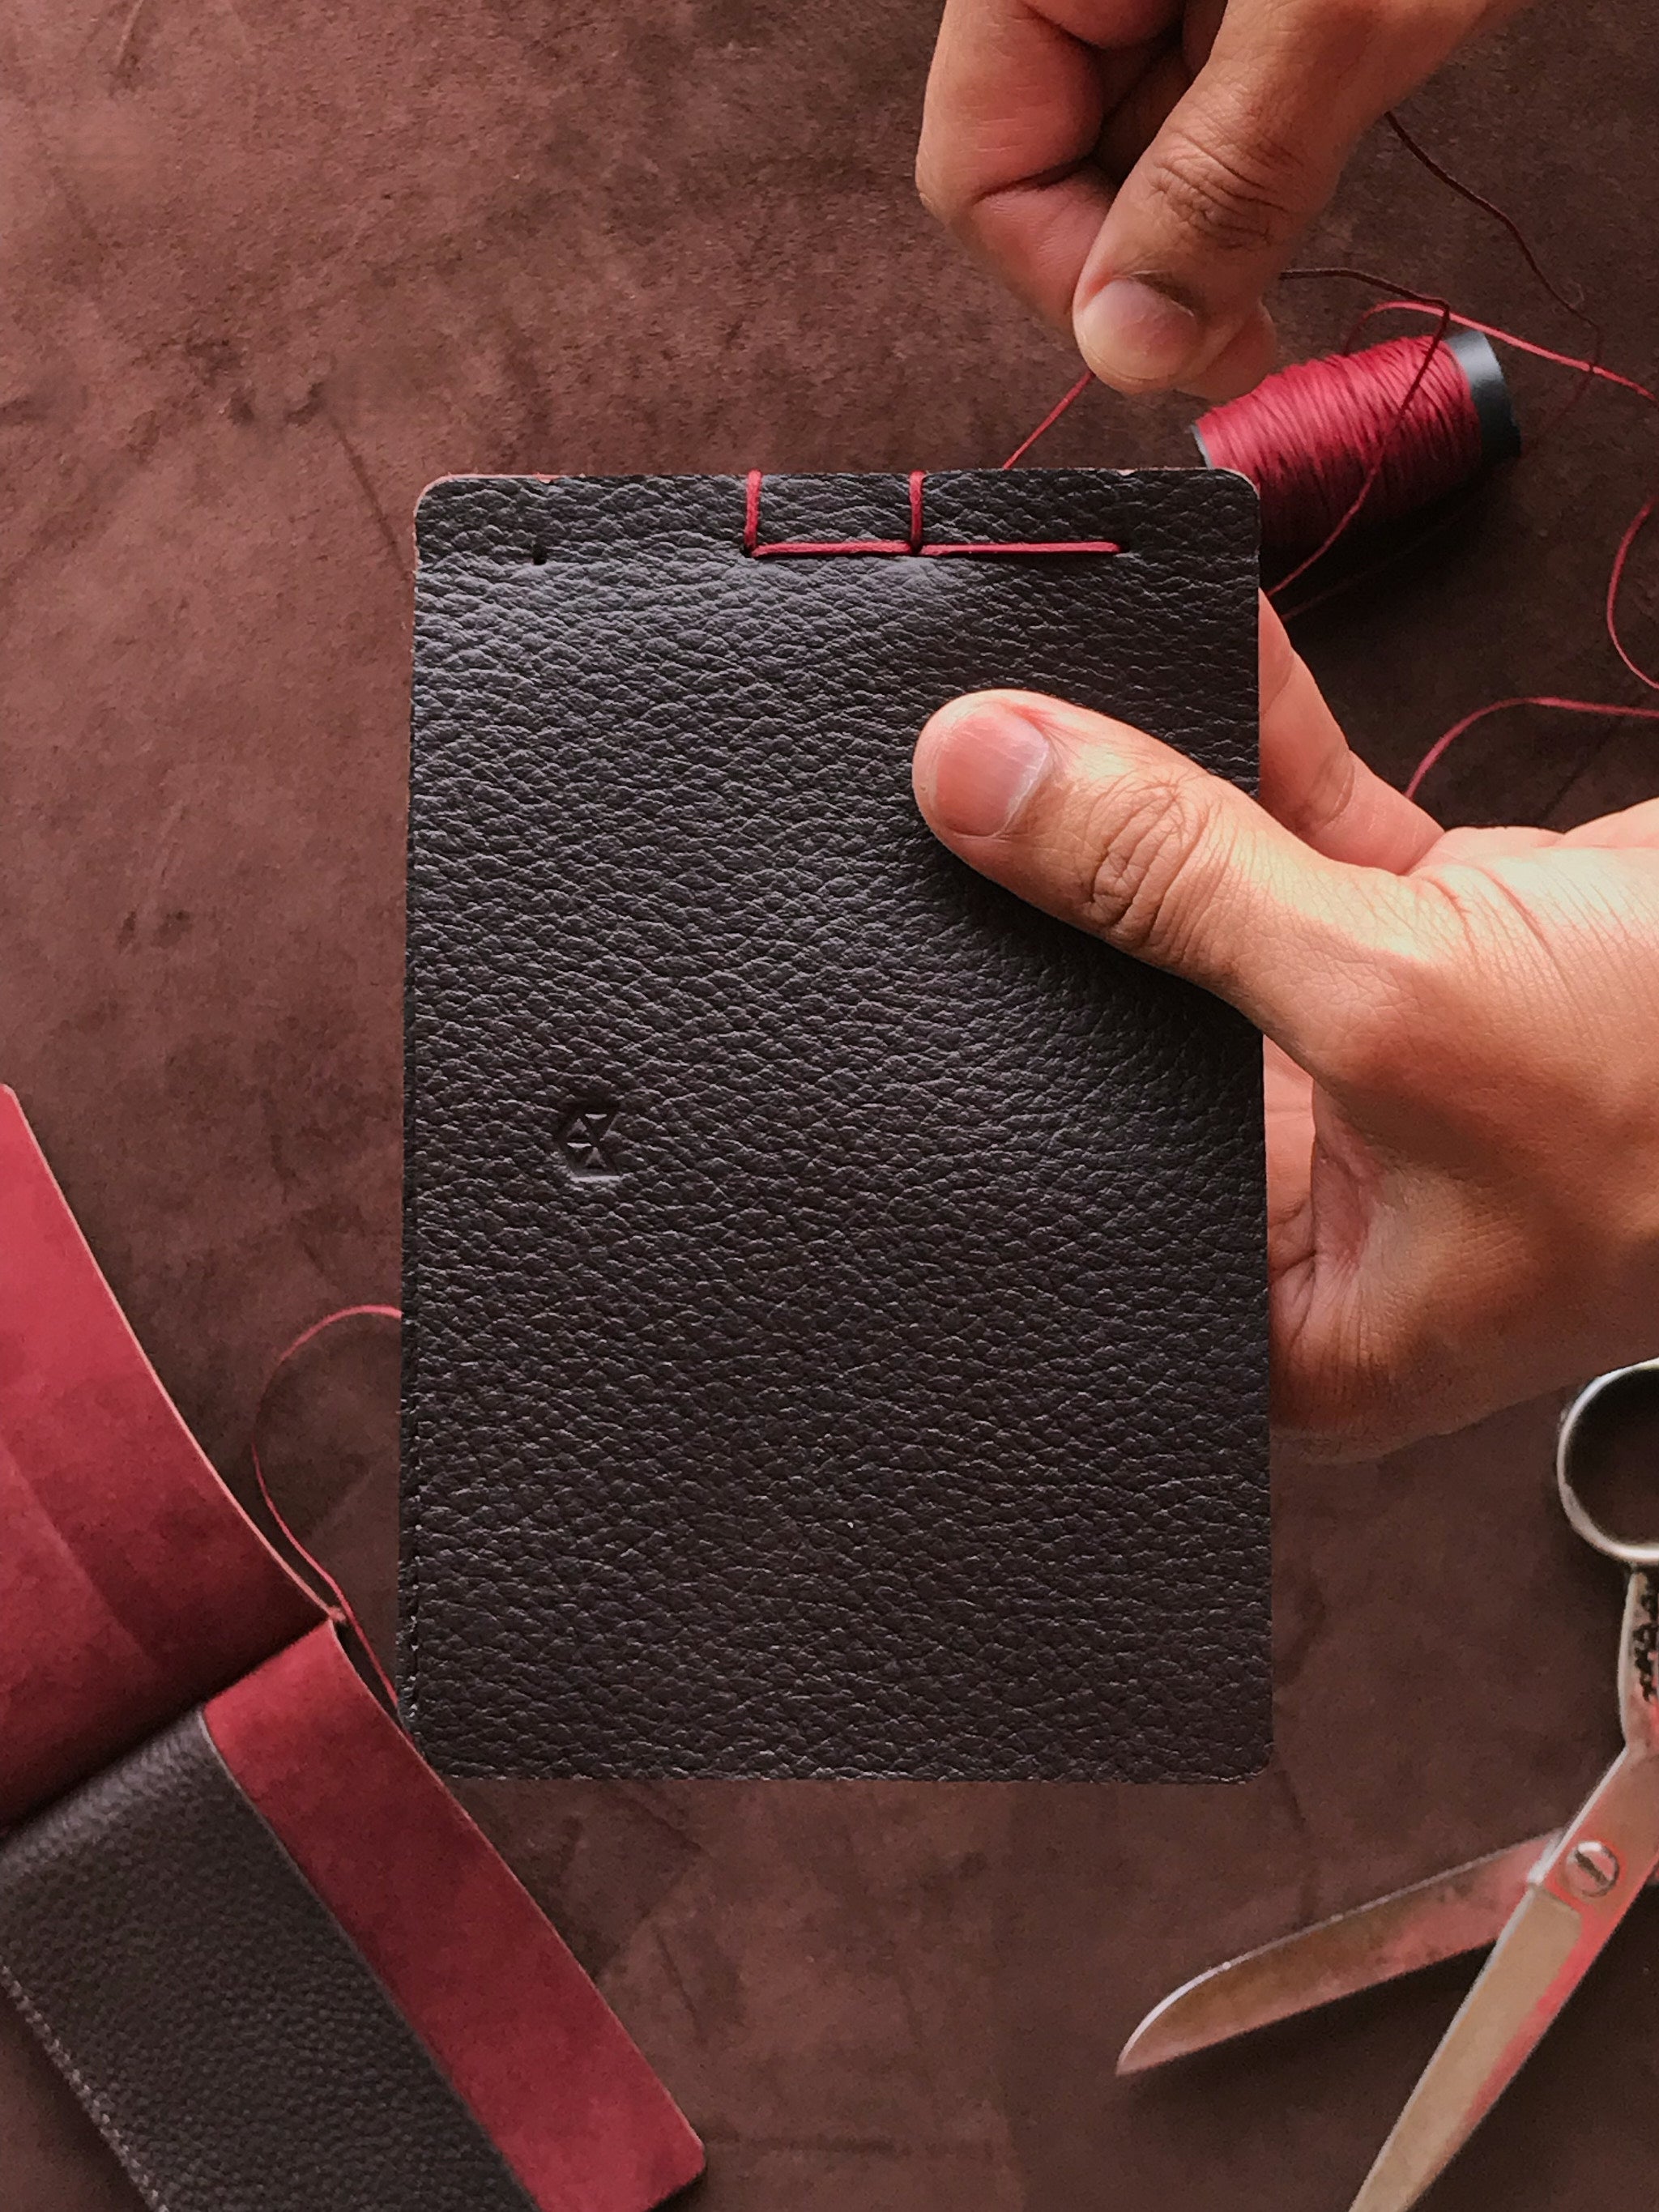 Luxury Leather Passport Case, Family Passport Cover 6 Passport Holders Black